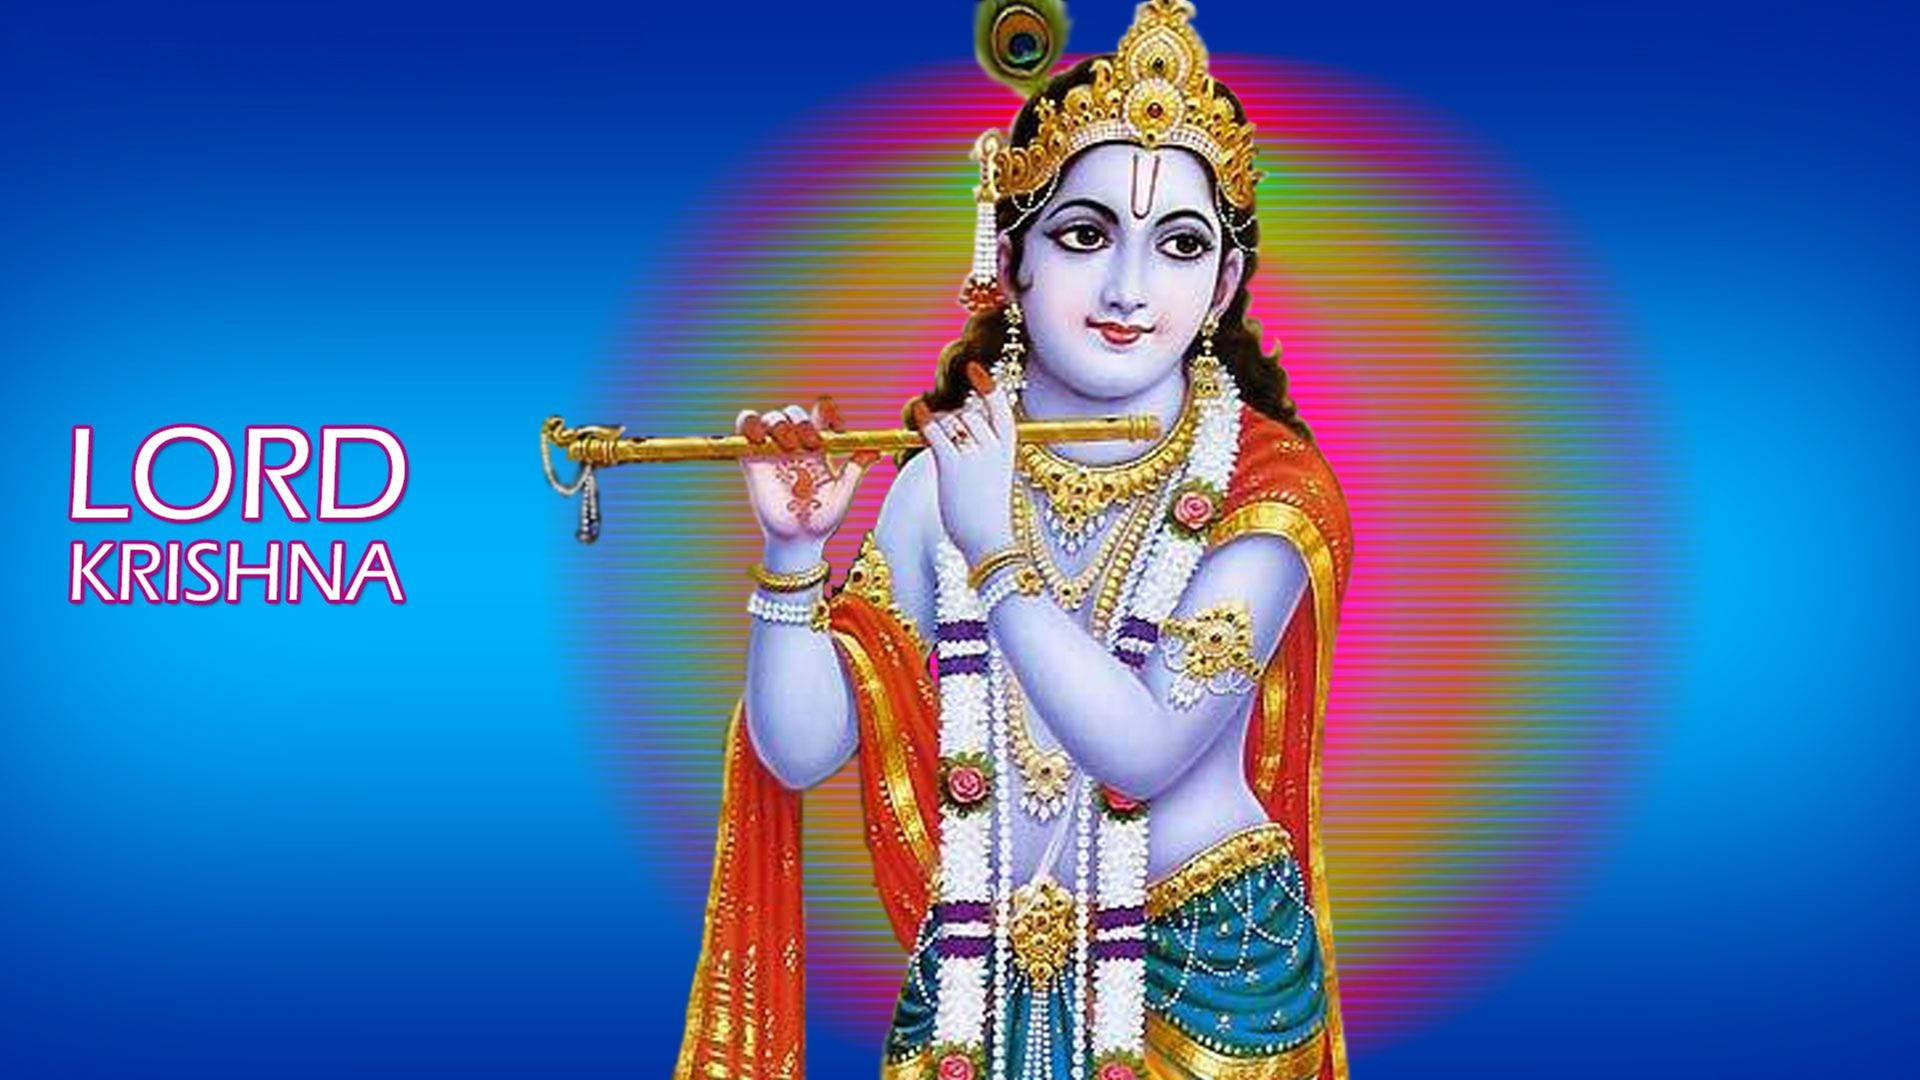 Lord Krishna 4k Psychedelic Digital Art Background